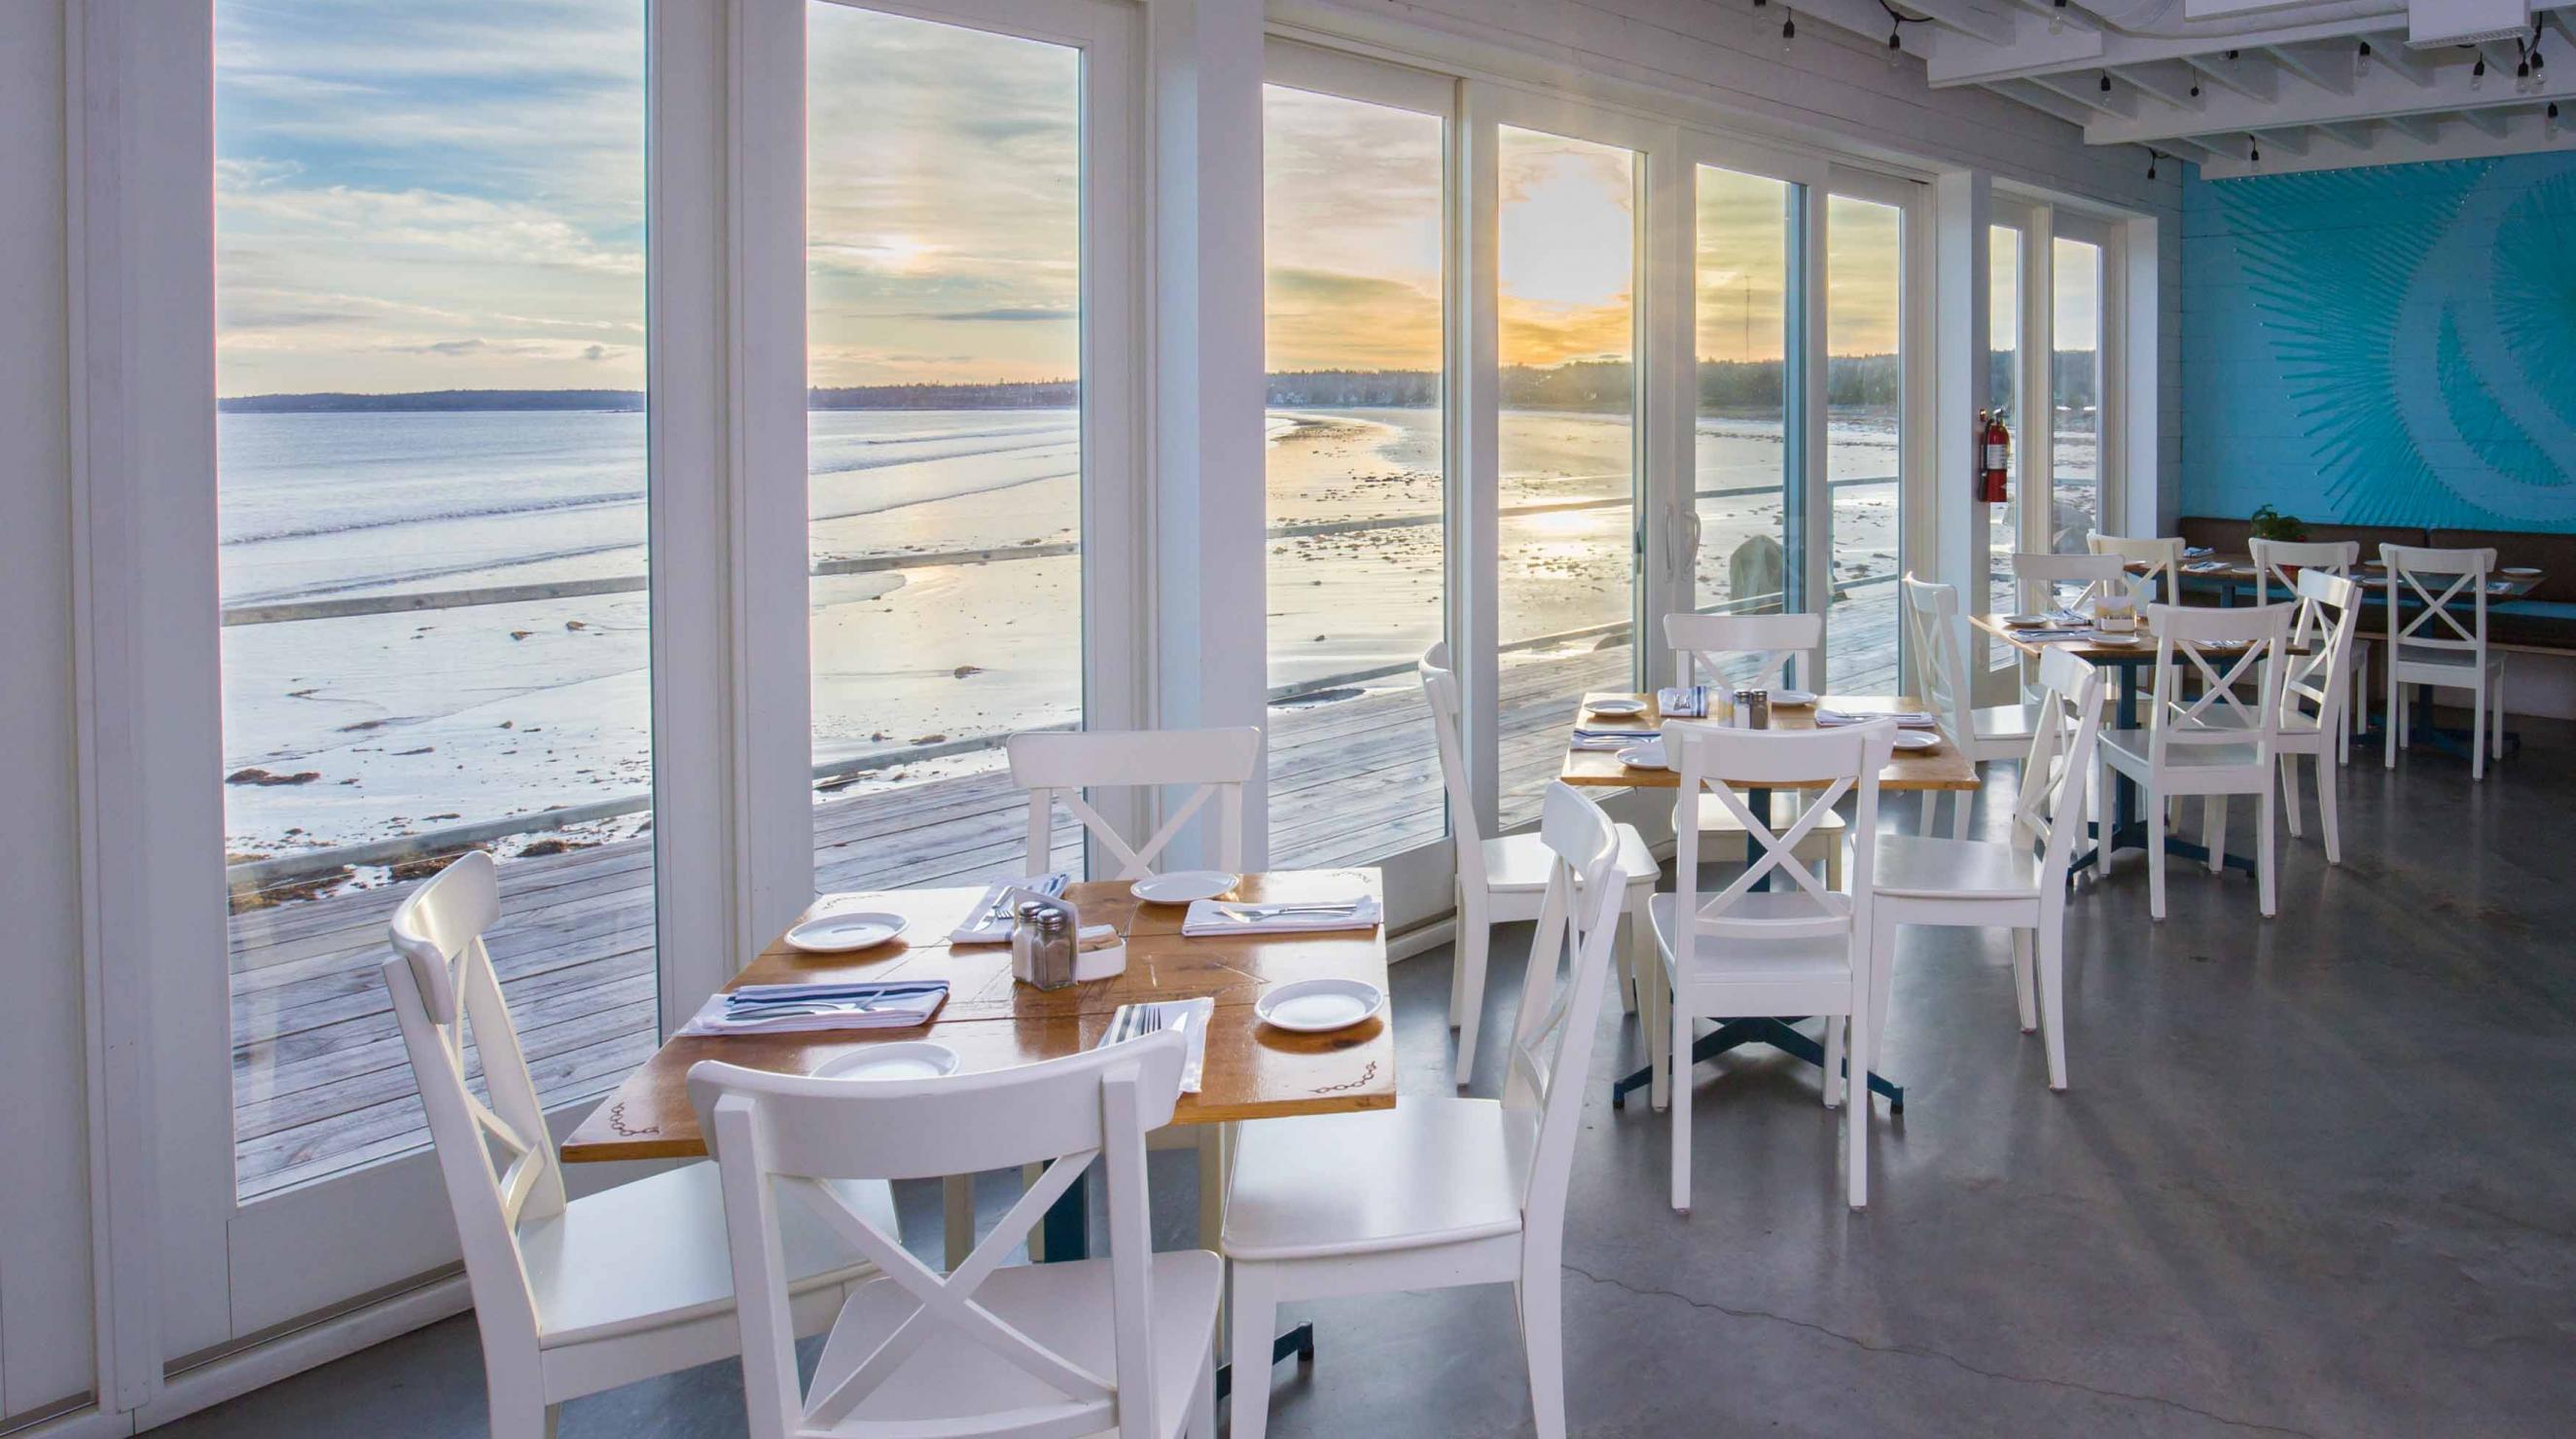 QuarterDeck Restaurant and Grill Ocean View